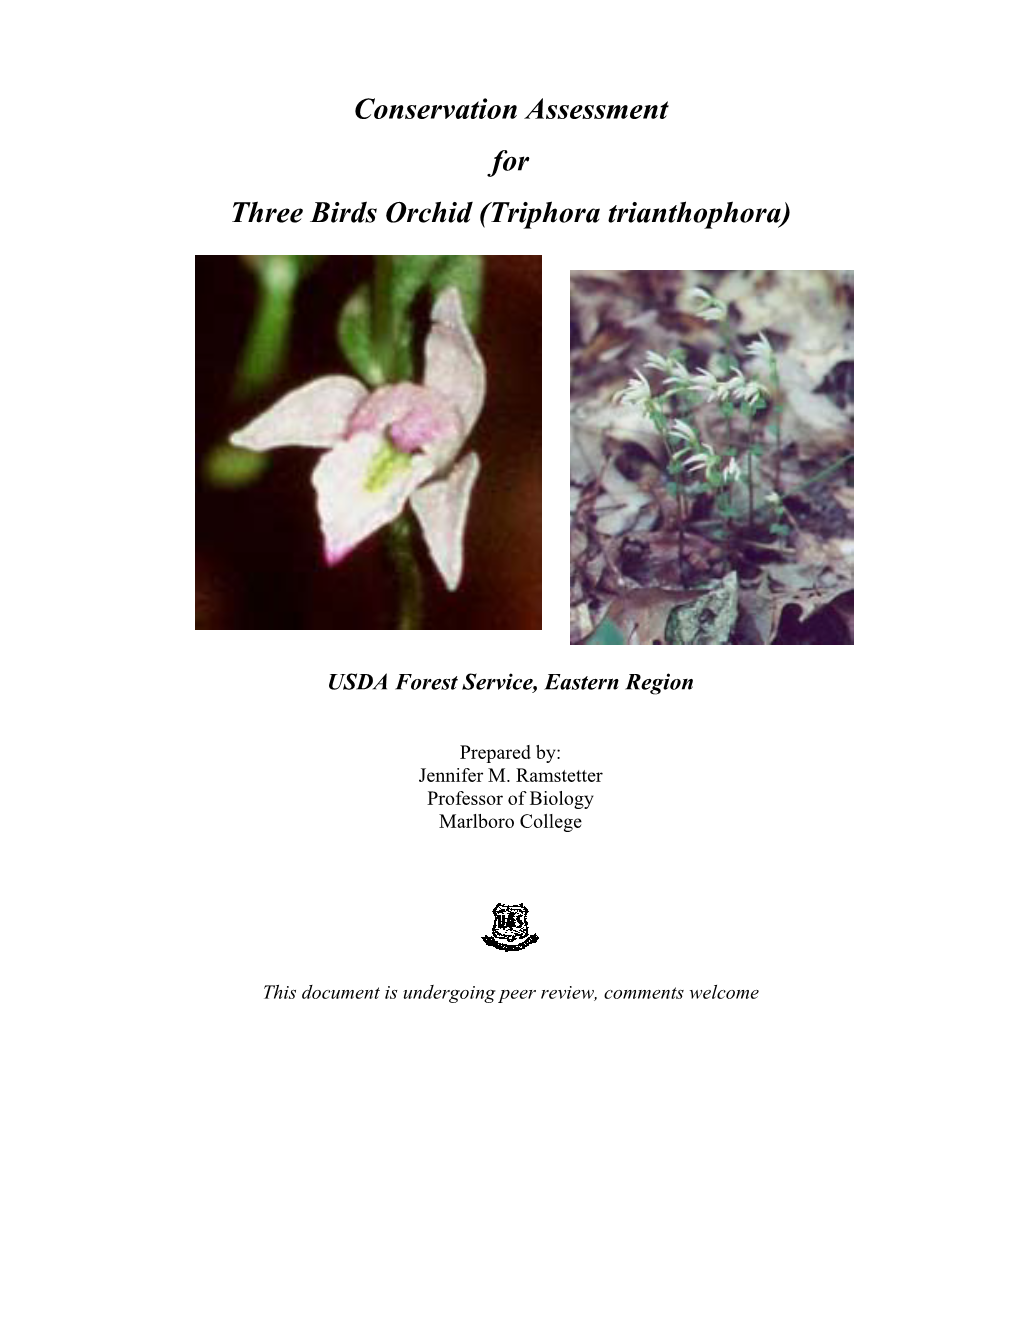 Conservation Assessment for Three Birds Orchid (Triphora Trianthophora)